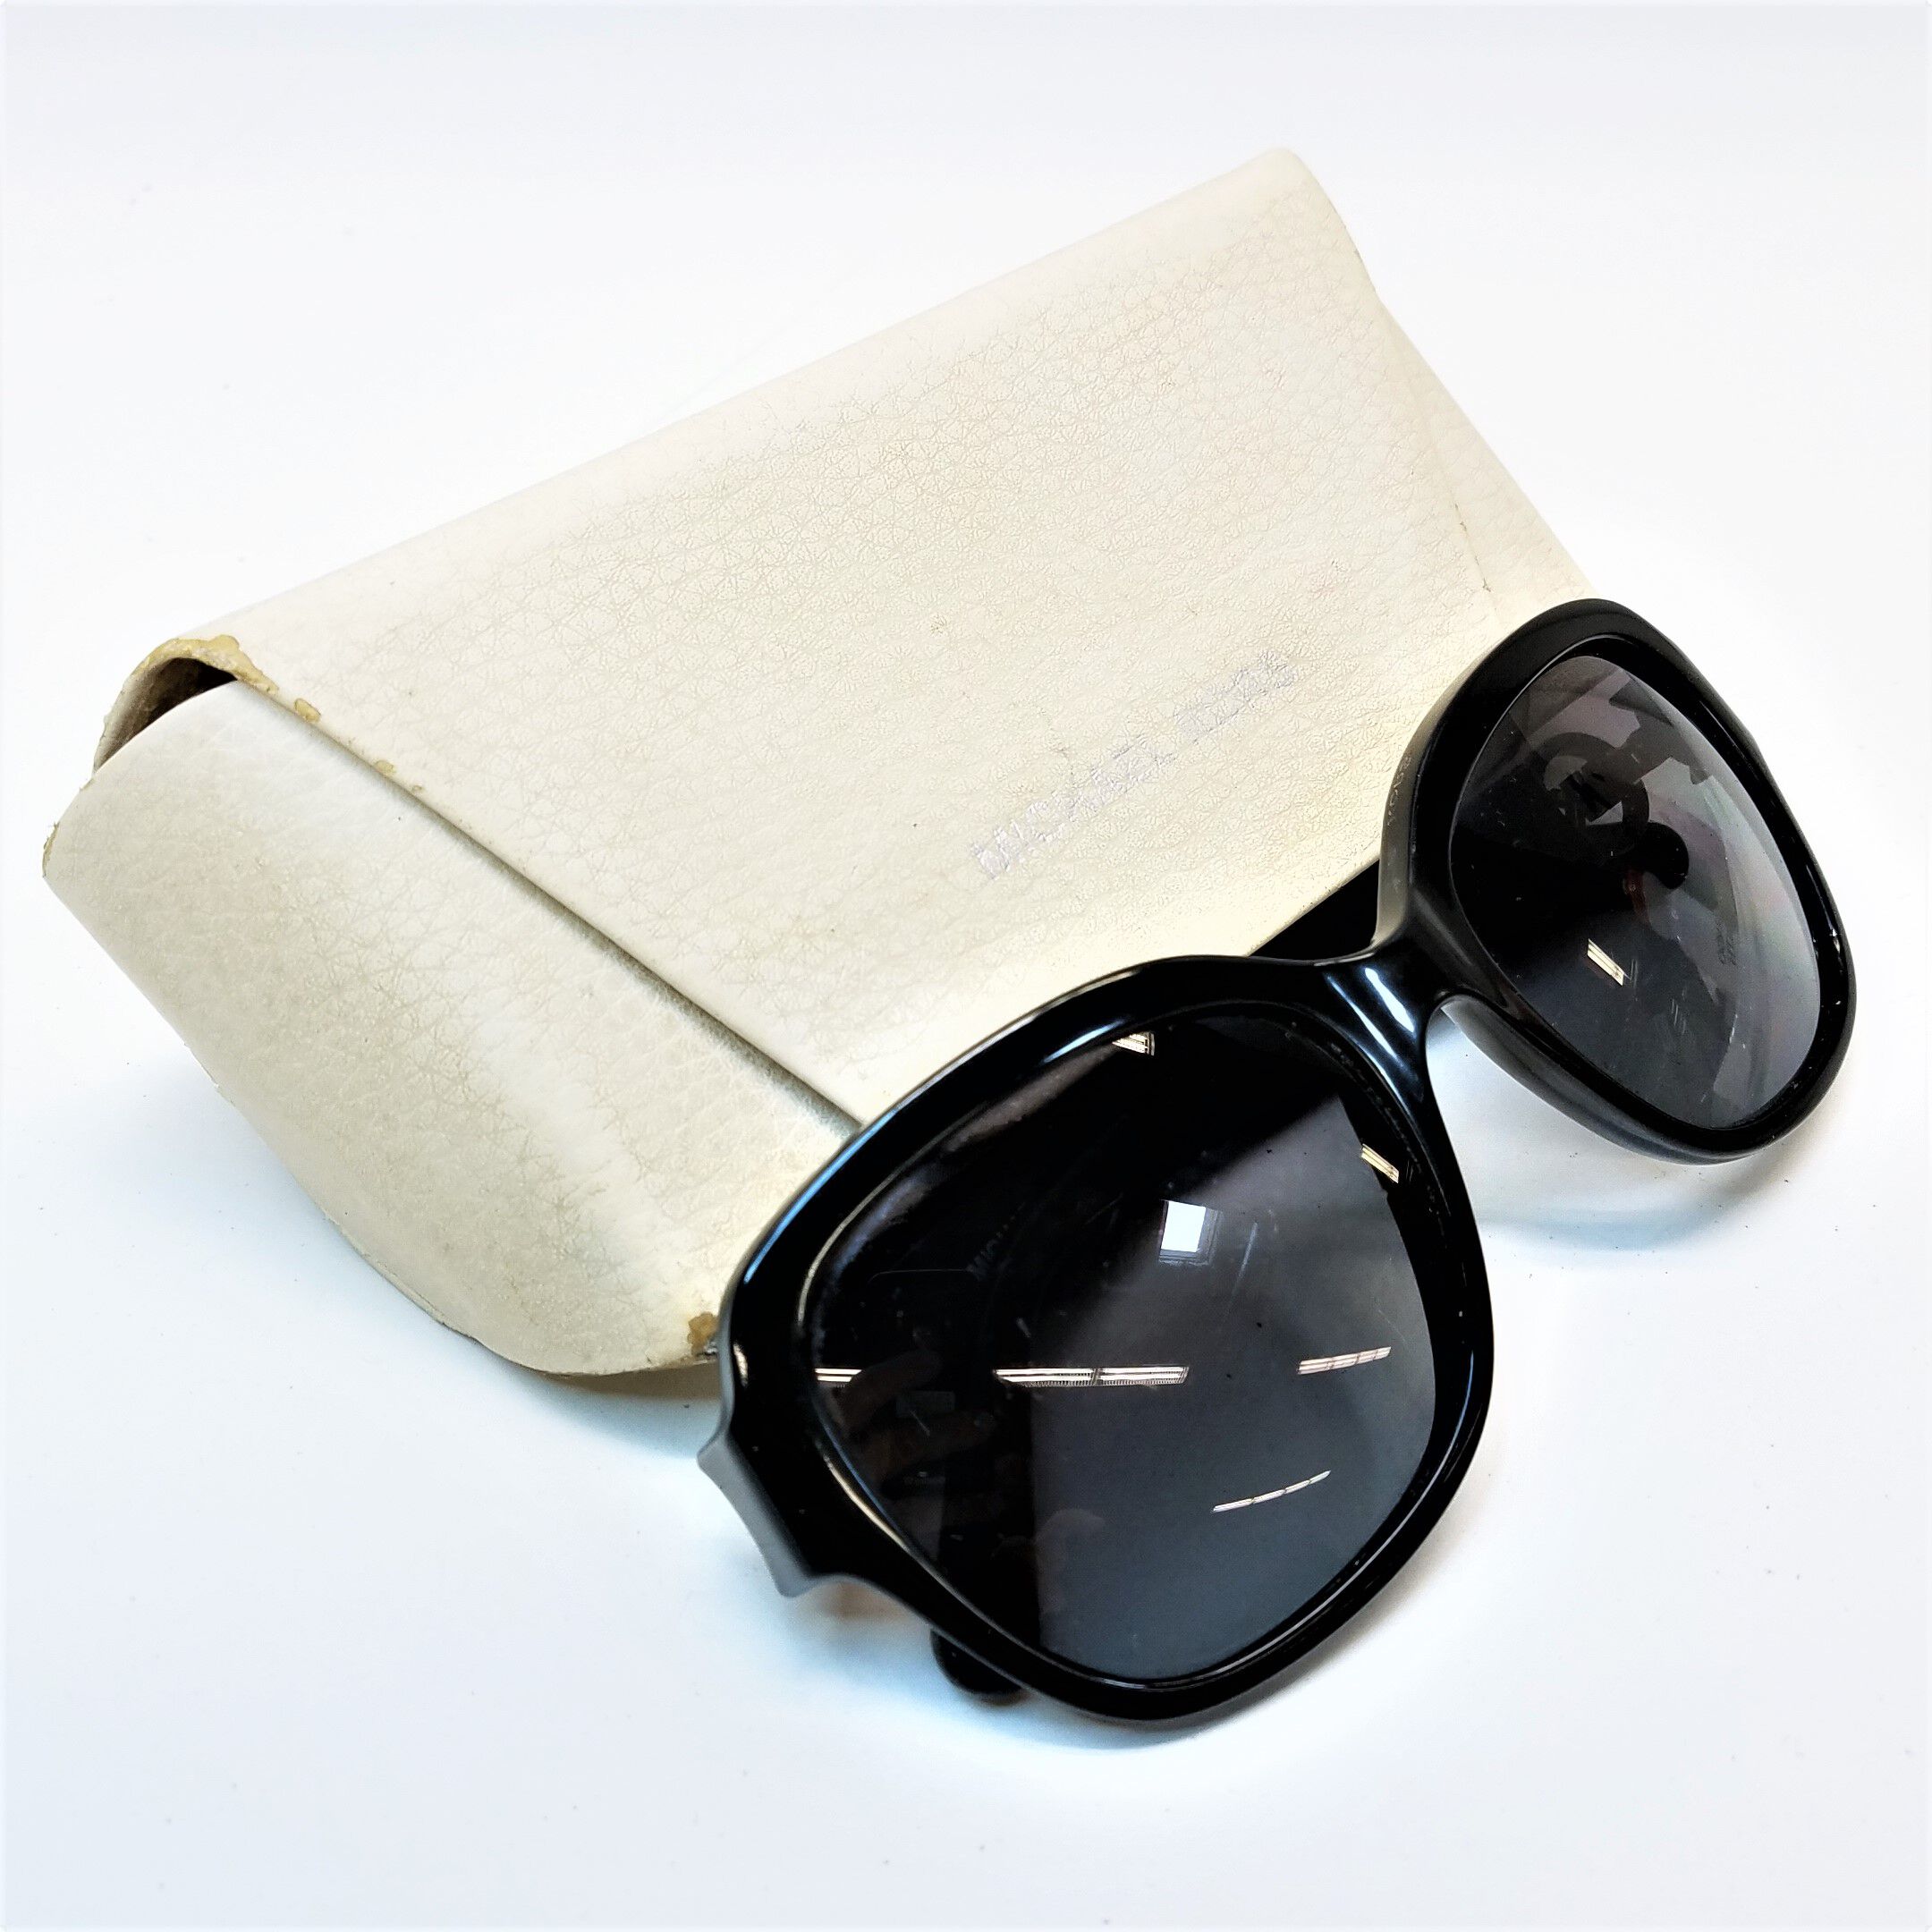 Michael Kors MK6027 TABITHA III Sunglasses  FREE Shipping  SOLD OUT